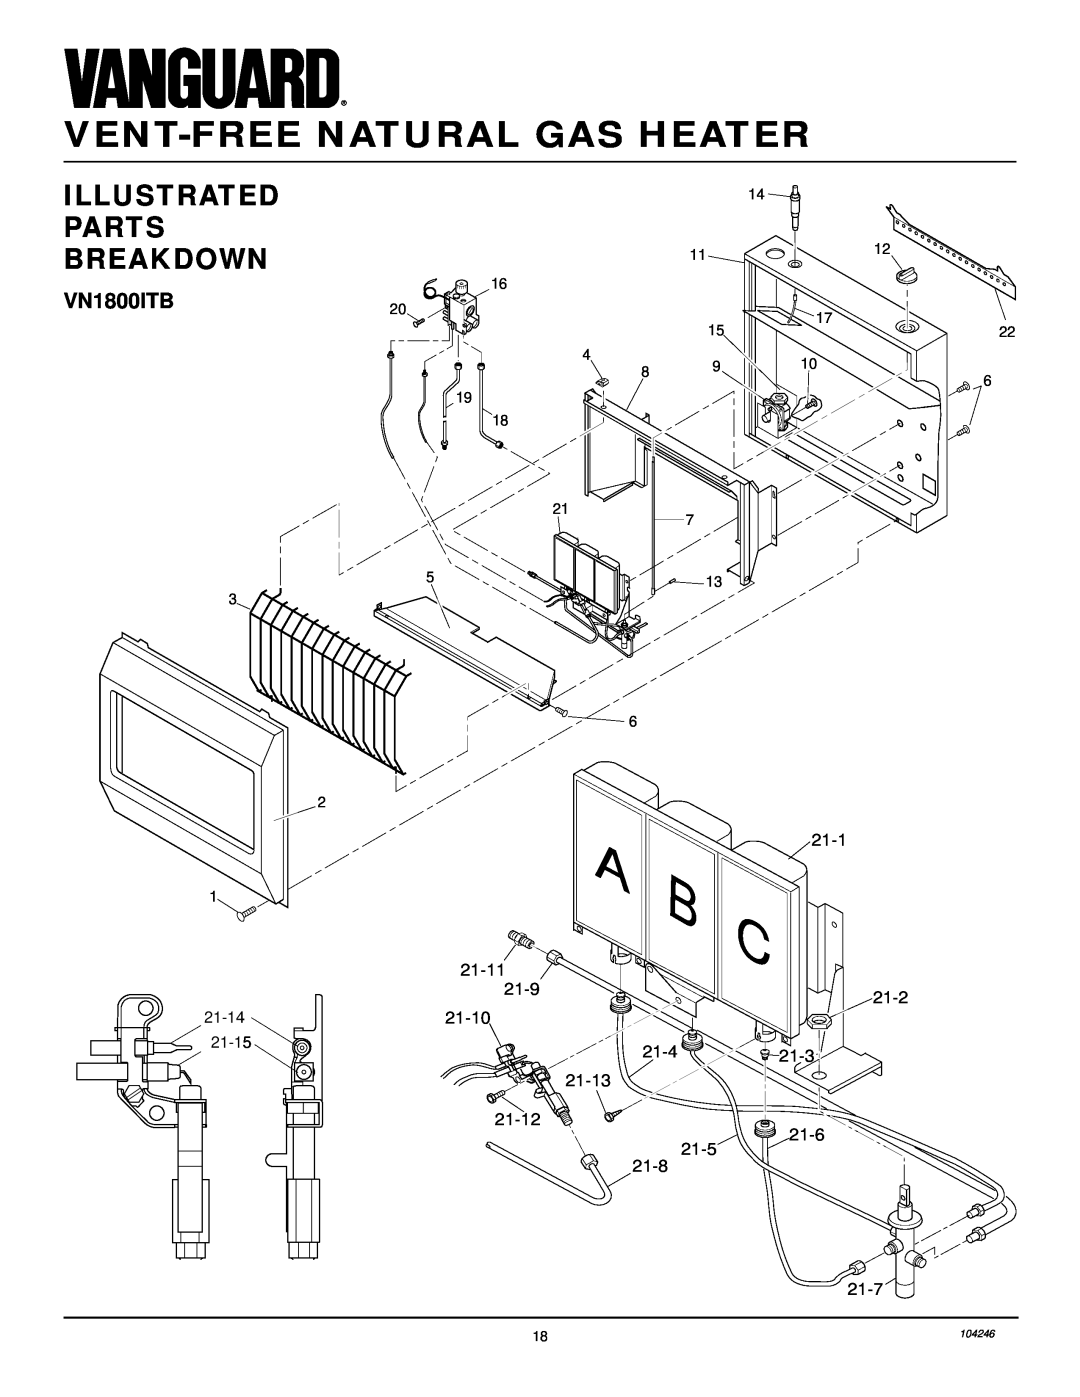 Vanguard Heating VN2550ITB Illustrated Parts Breakdown, Vent-Freenatural Gas Heater, 21-11, 21-10, 21-13, 21-4, 21-1 C 